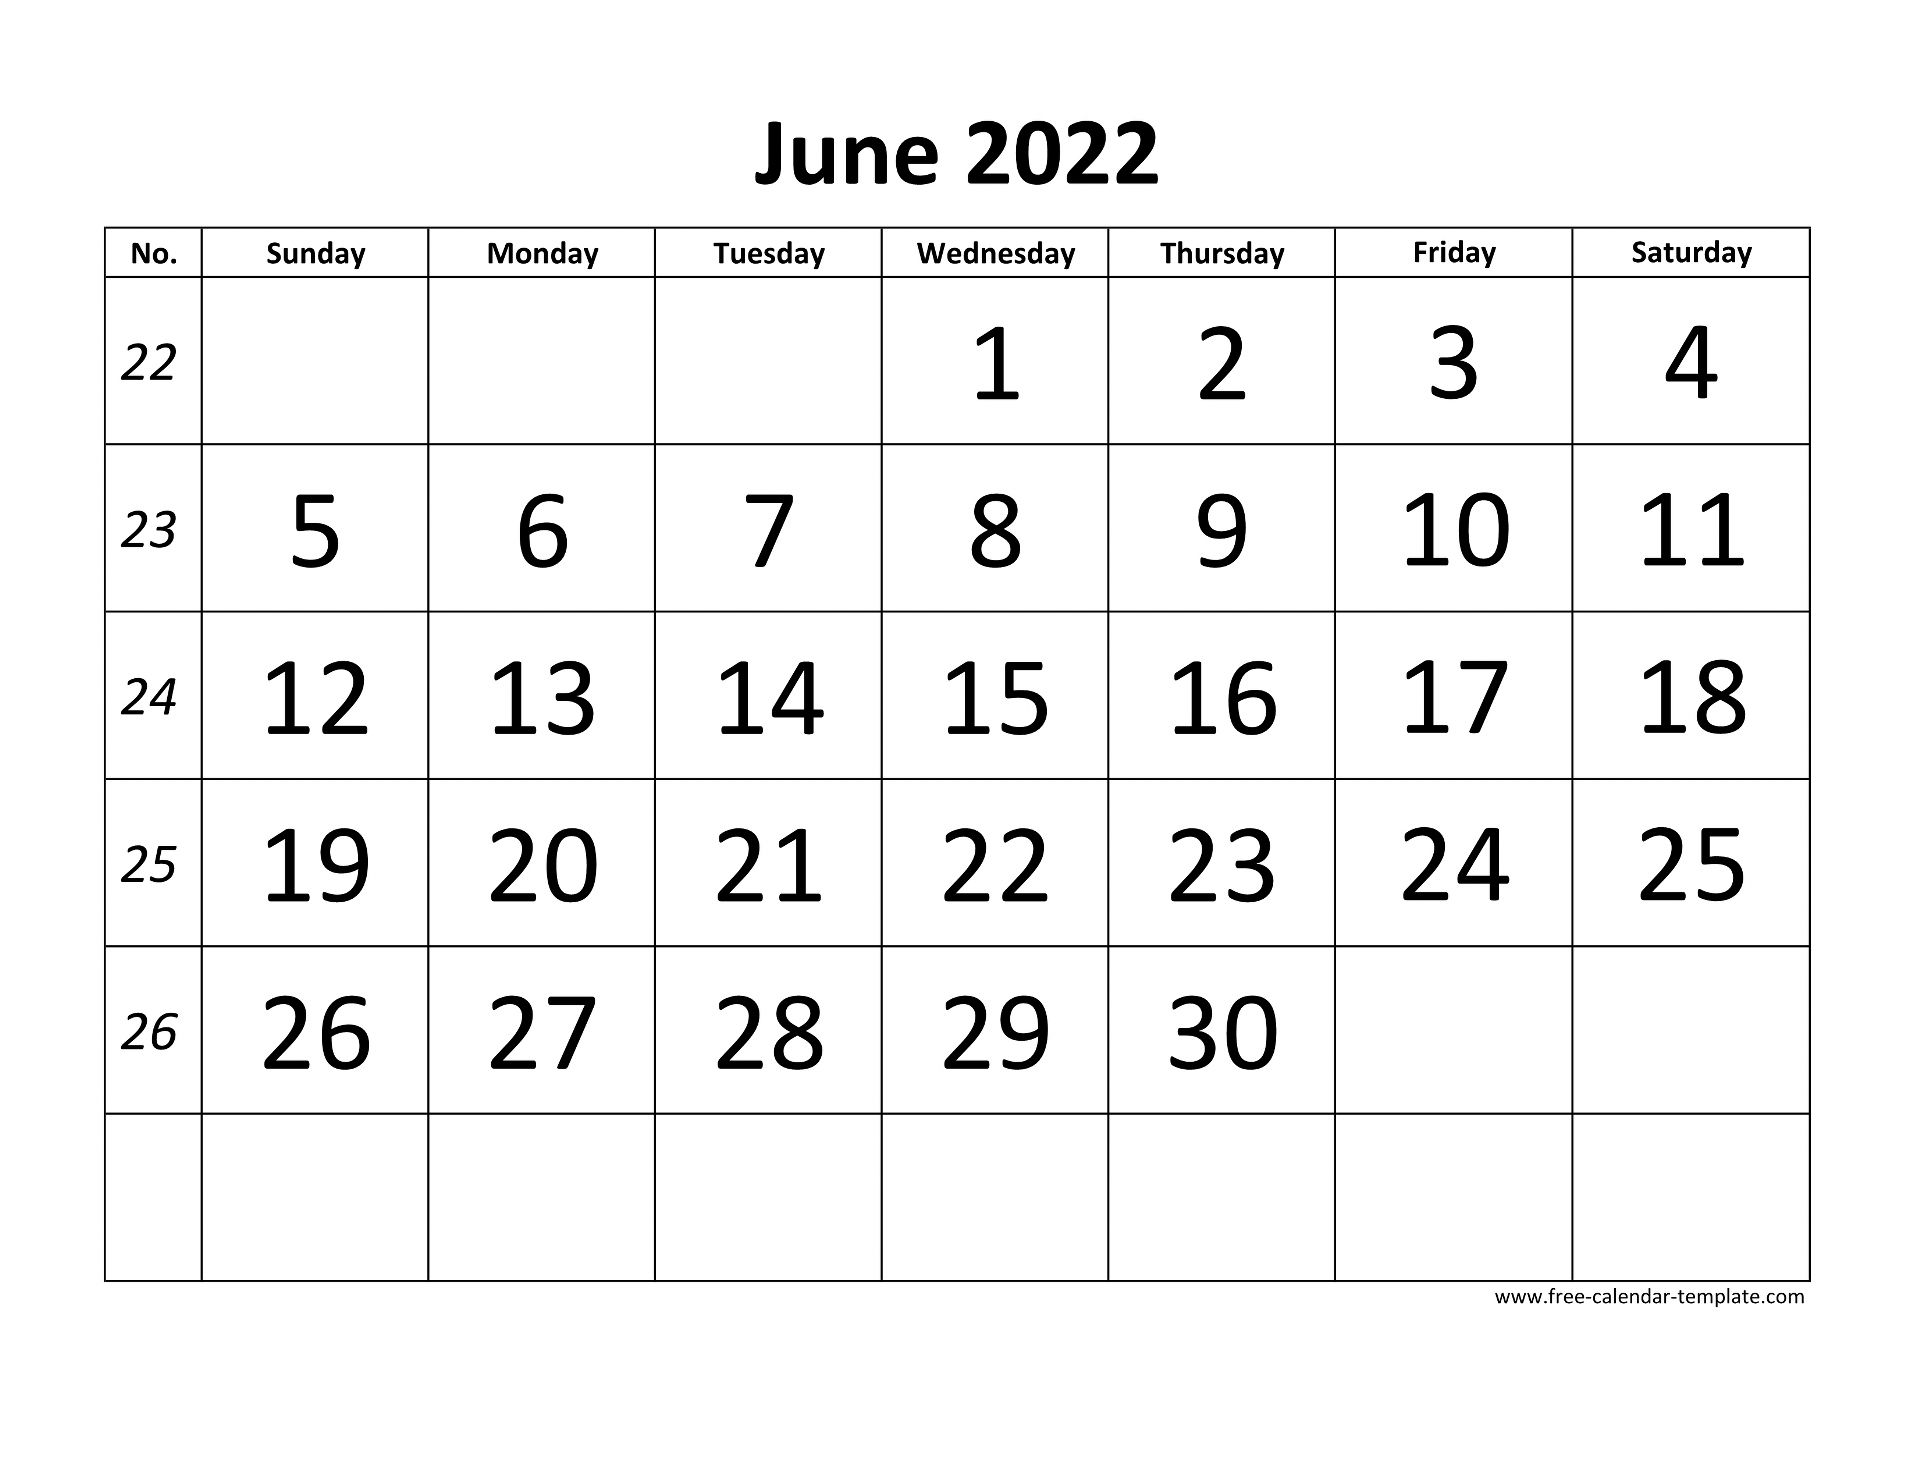 June 2022 Free Calendar Tempplate